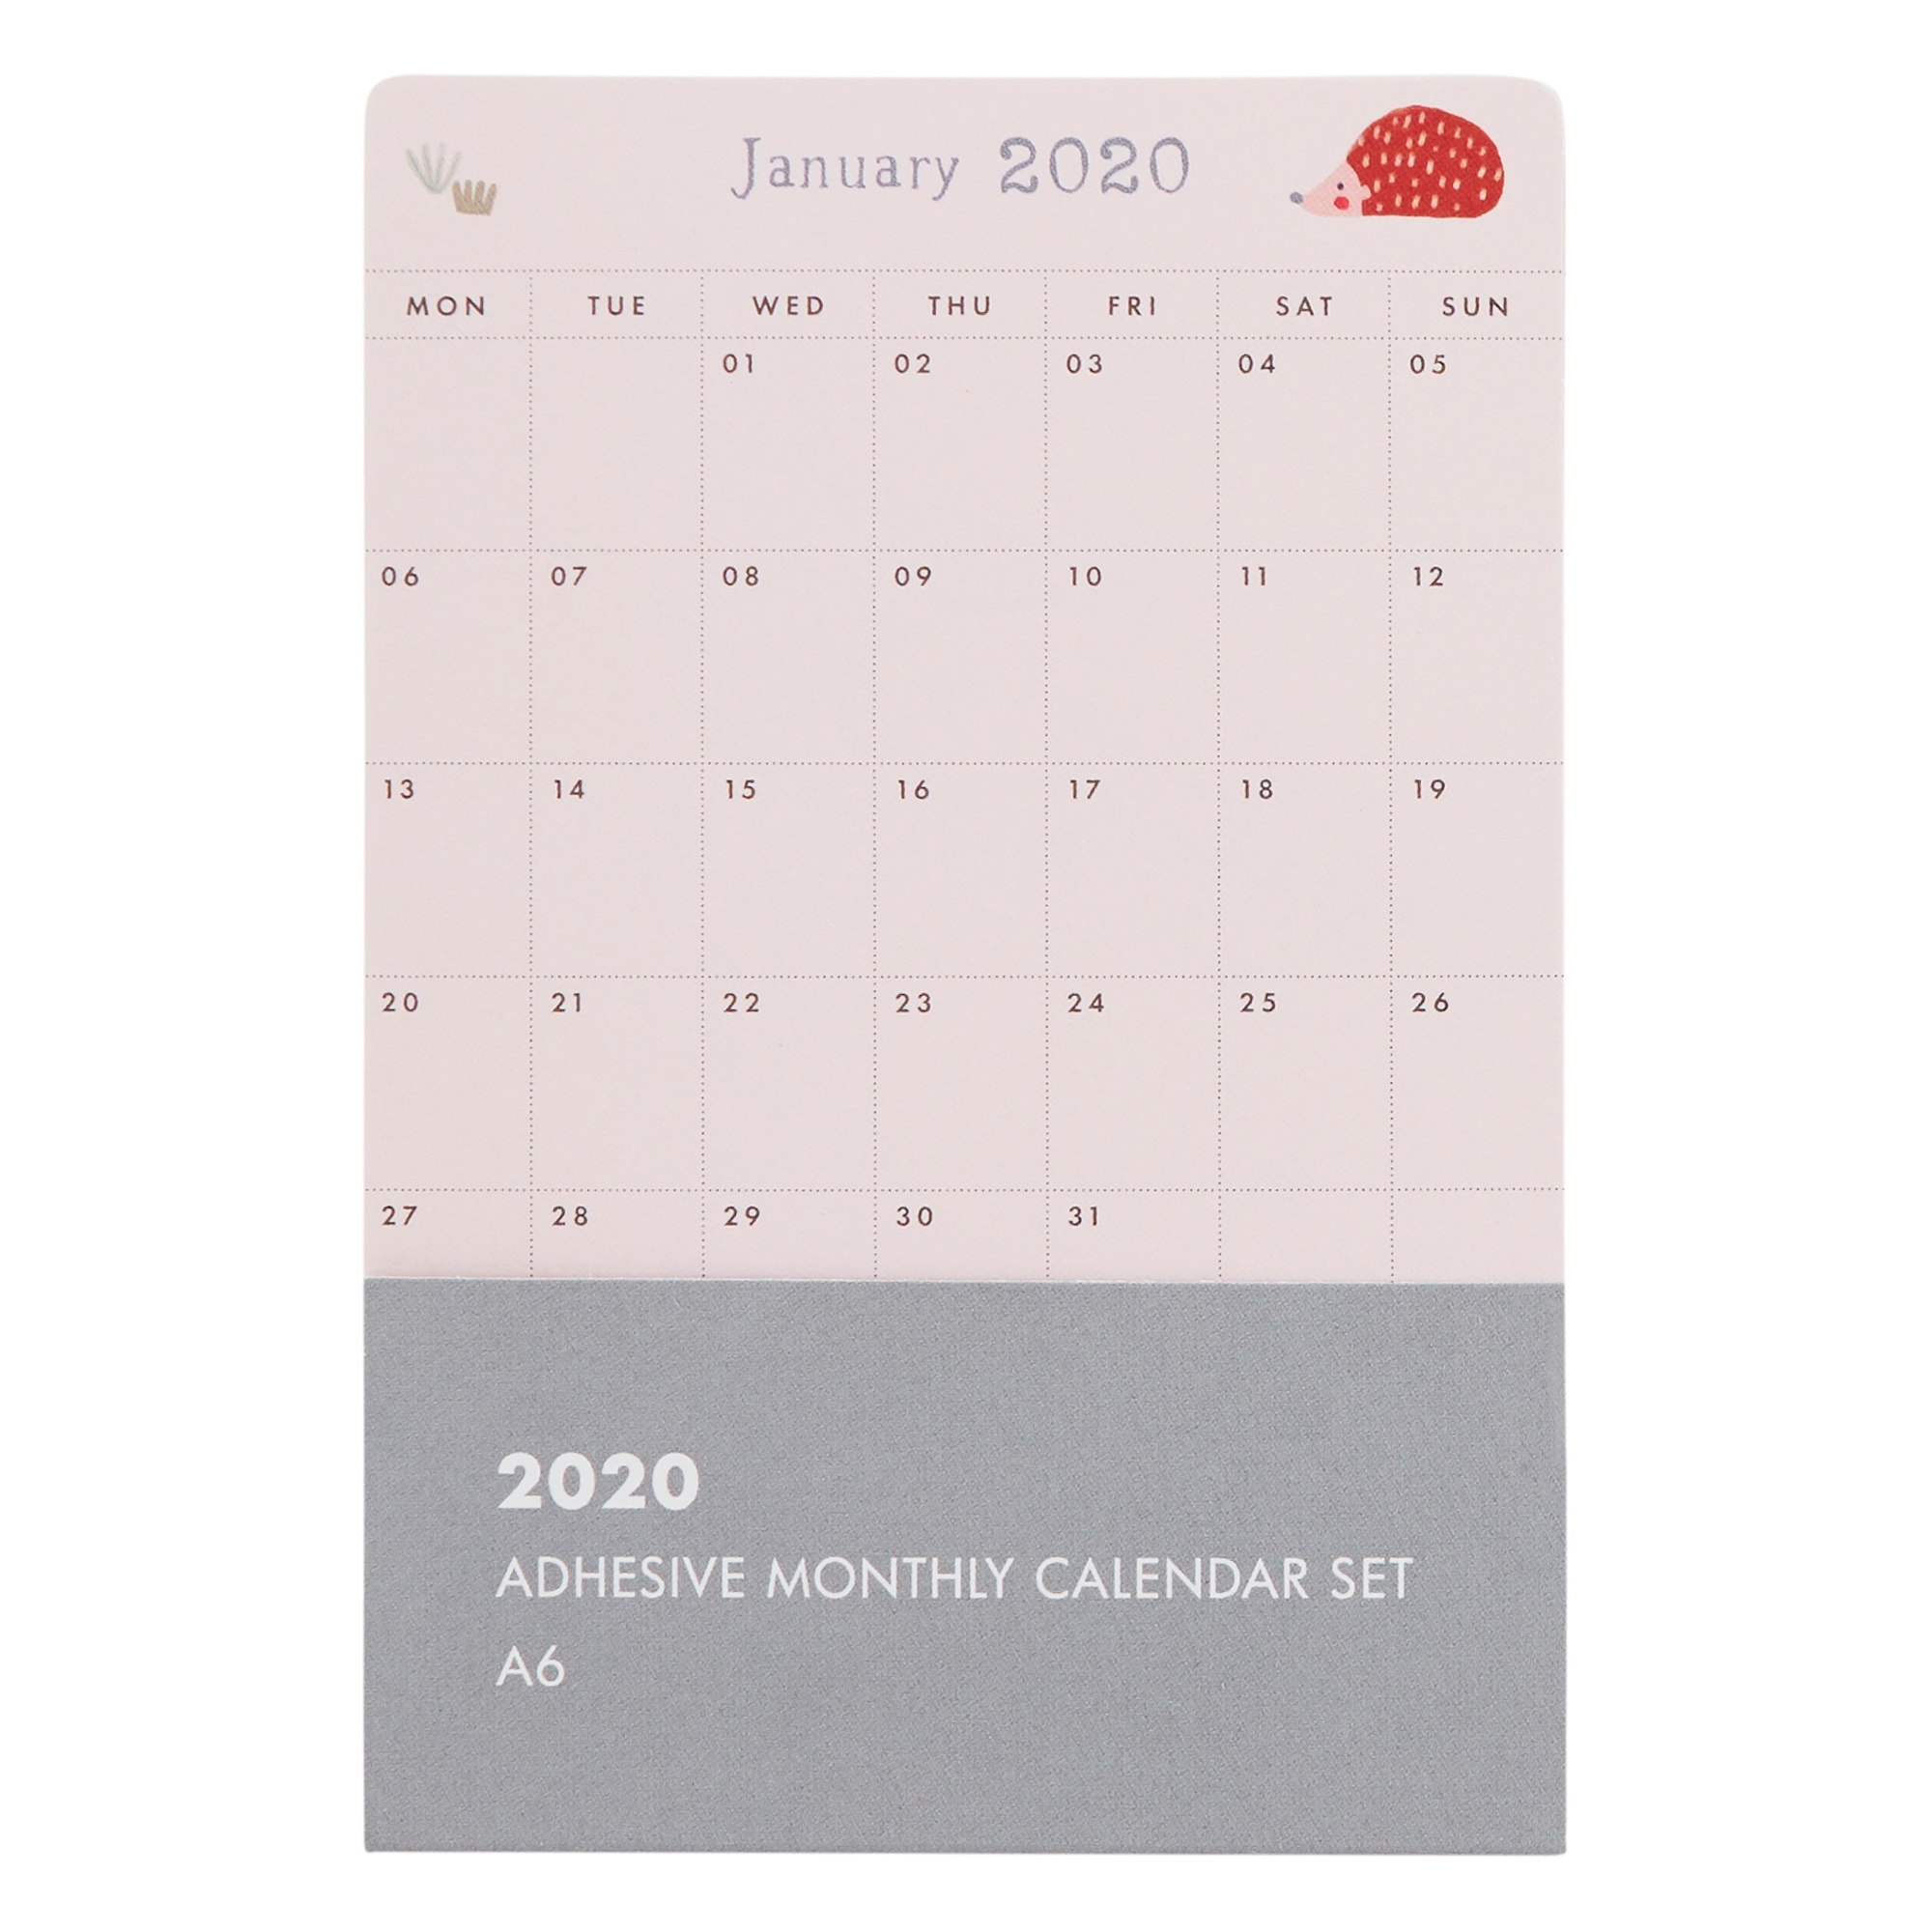 2020 Sweet Adhesive Monthly Calendar Set: Woodland